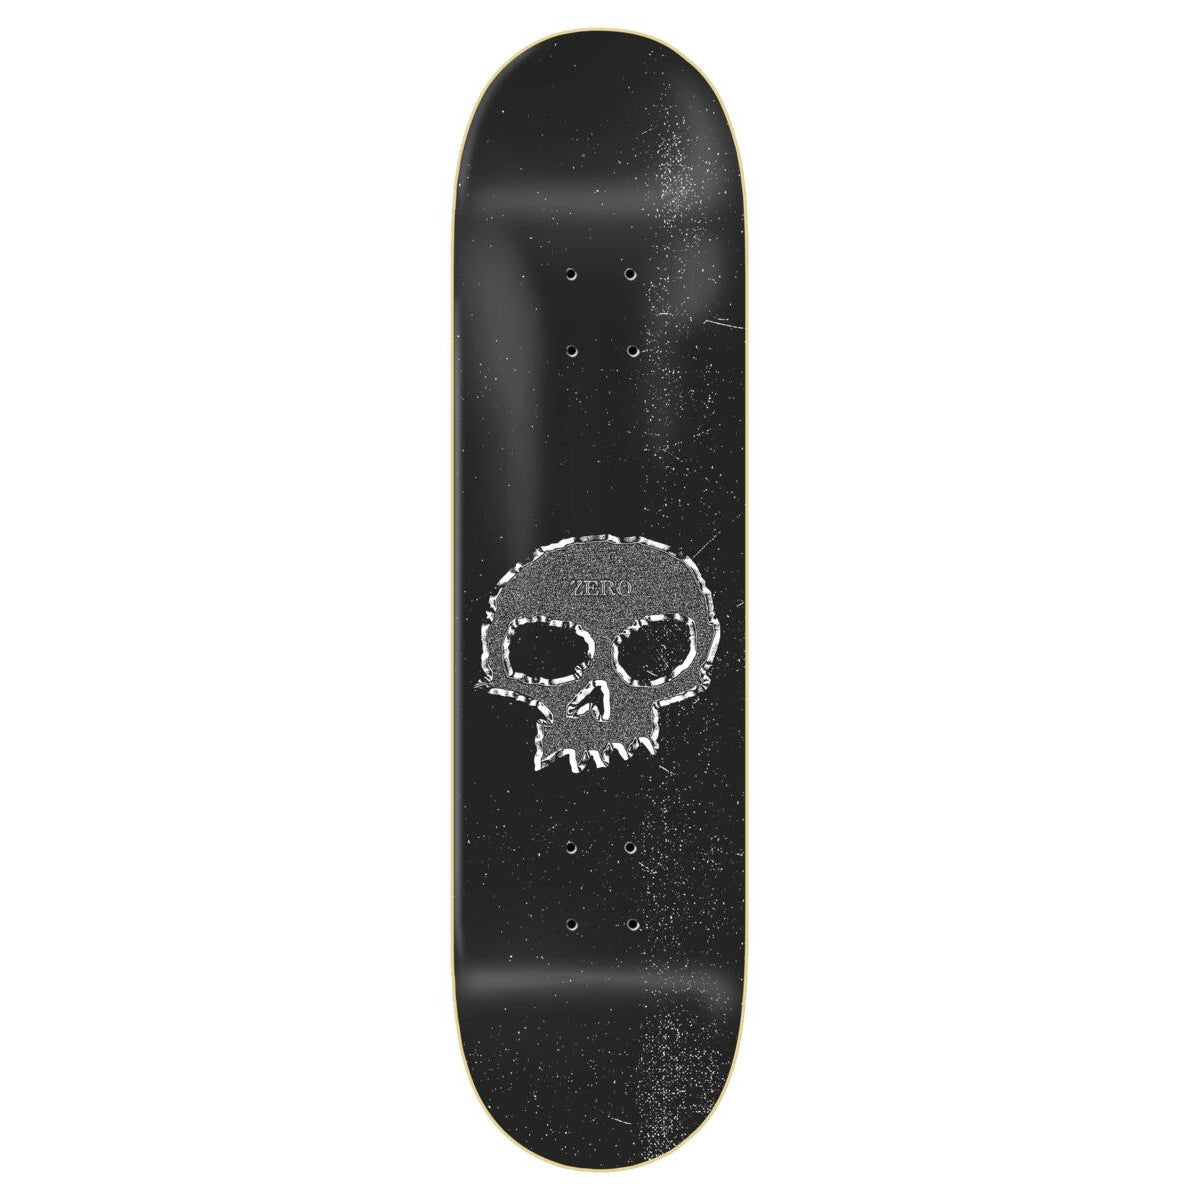 Handscreened Less Than Zero Skateboard Deck